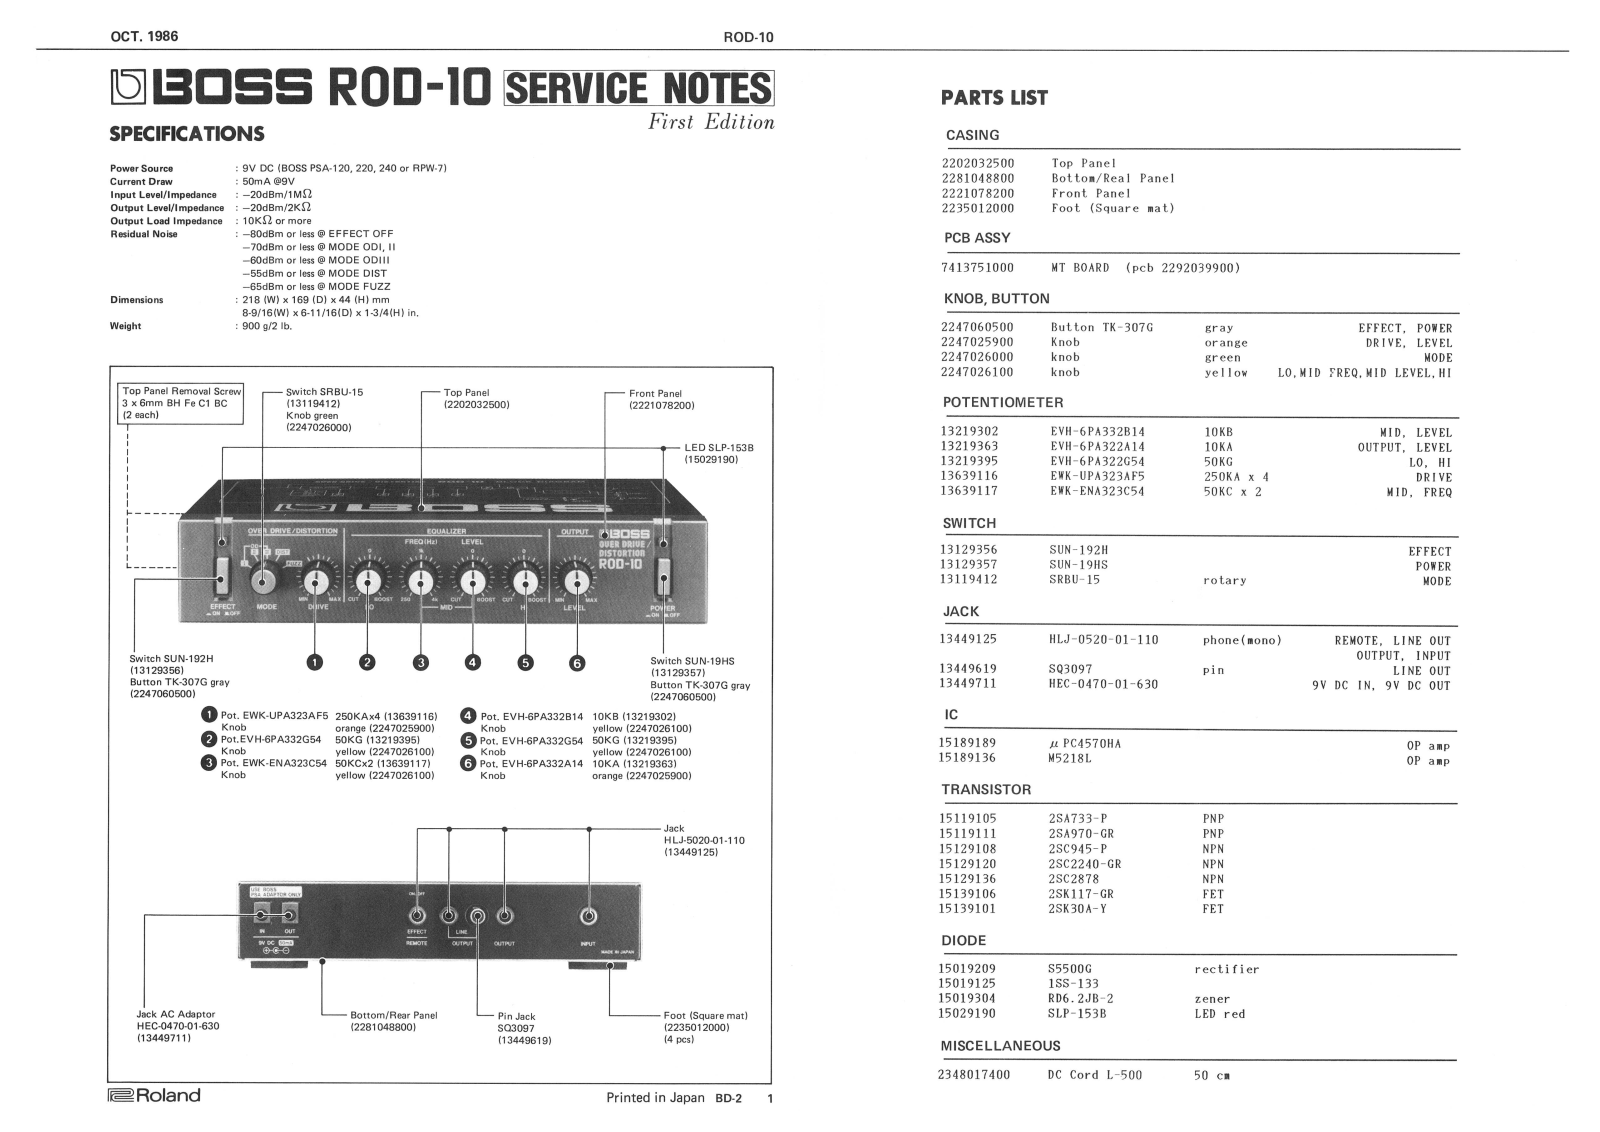 BOSS ROD-10 Service Manual